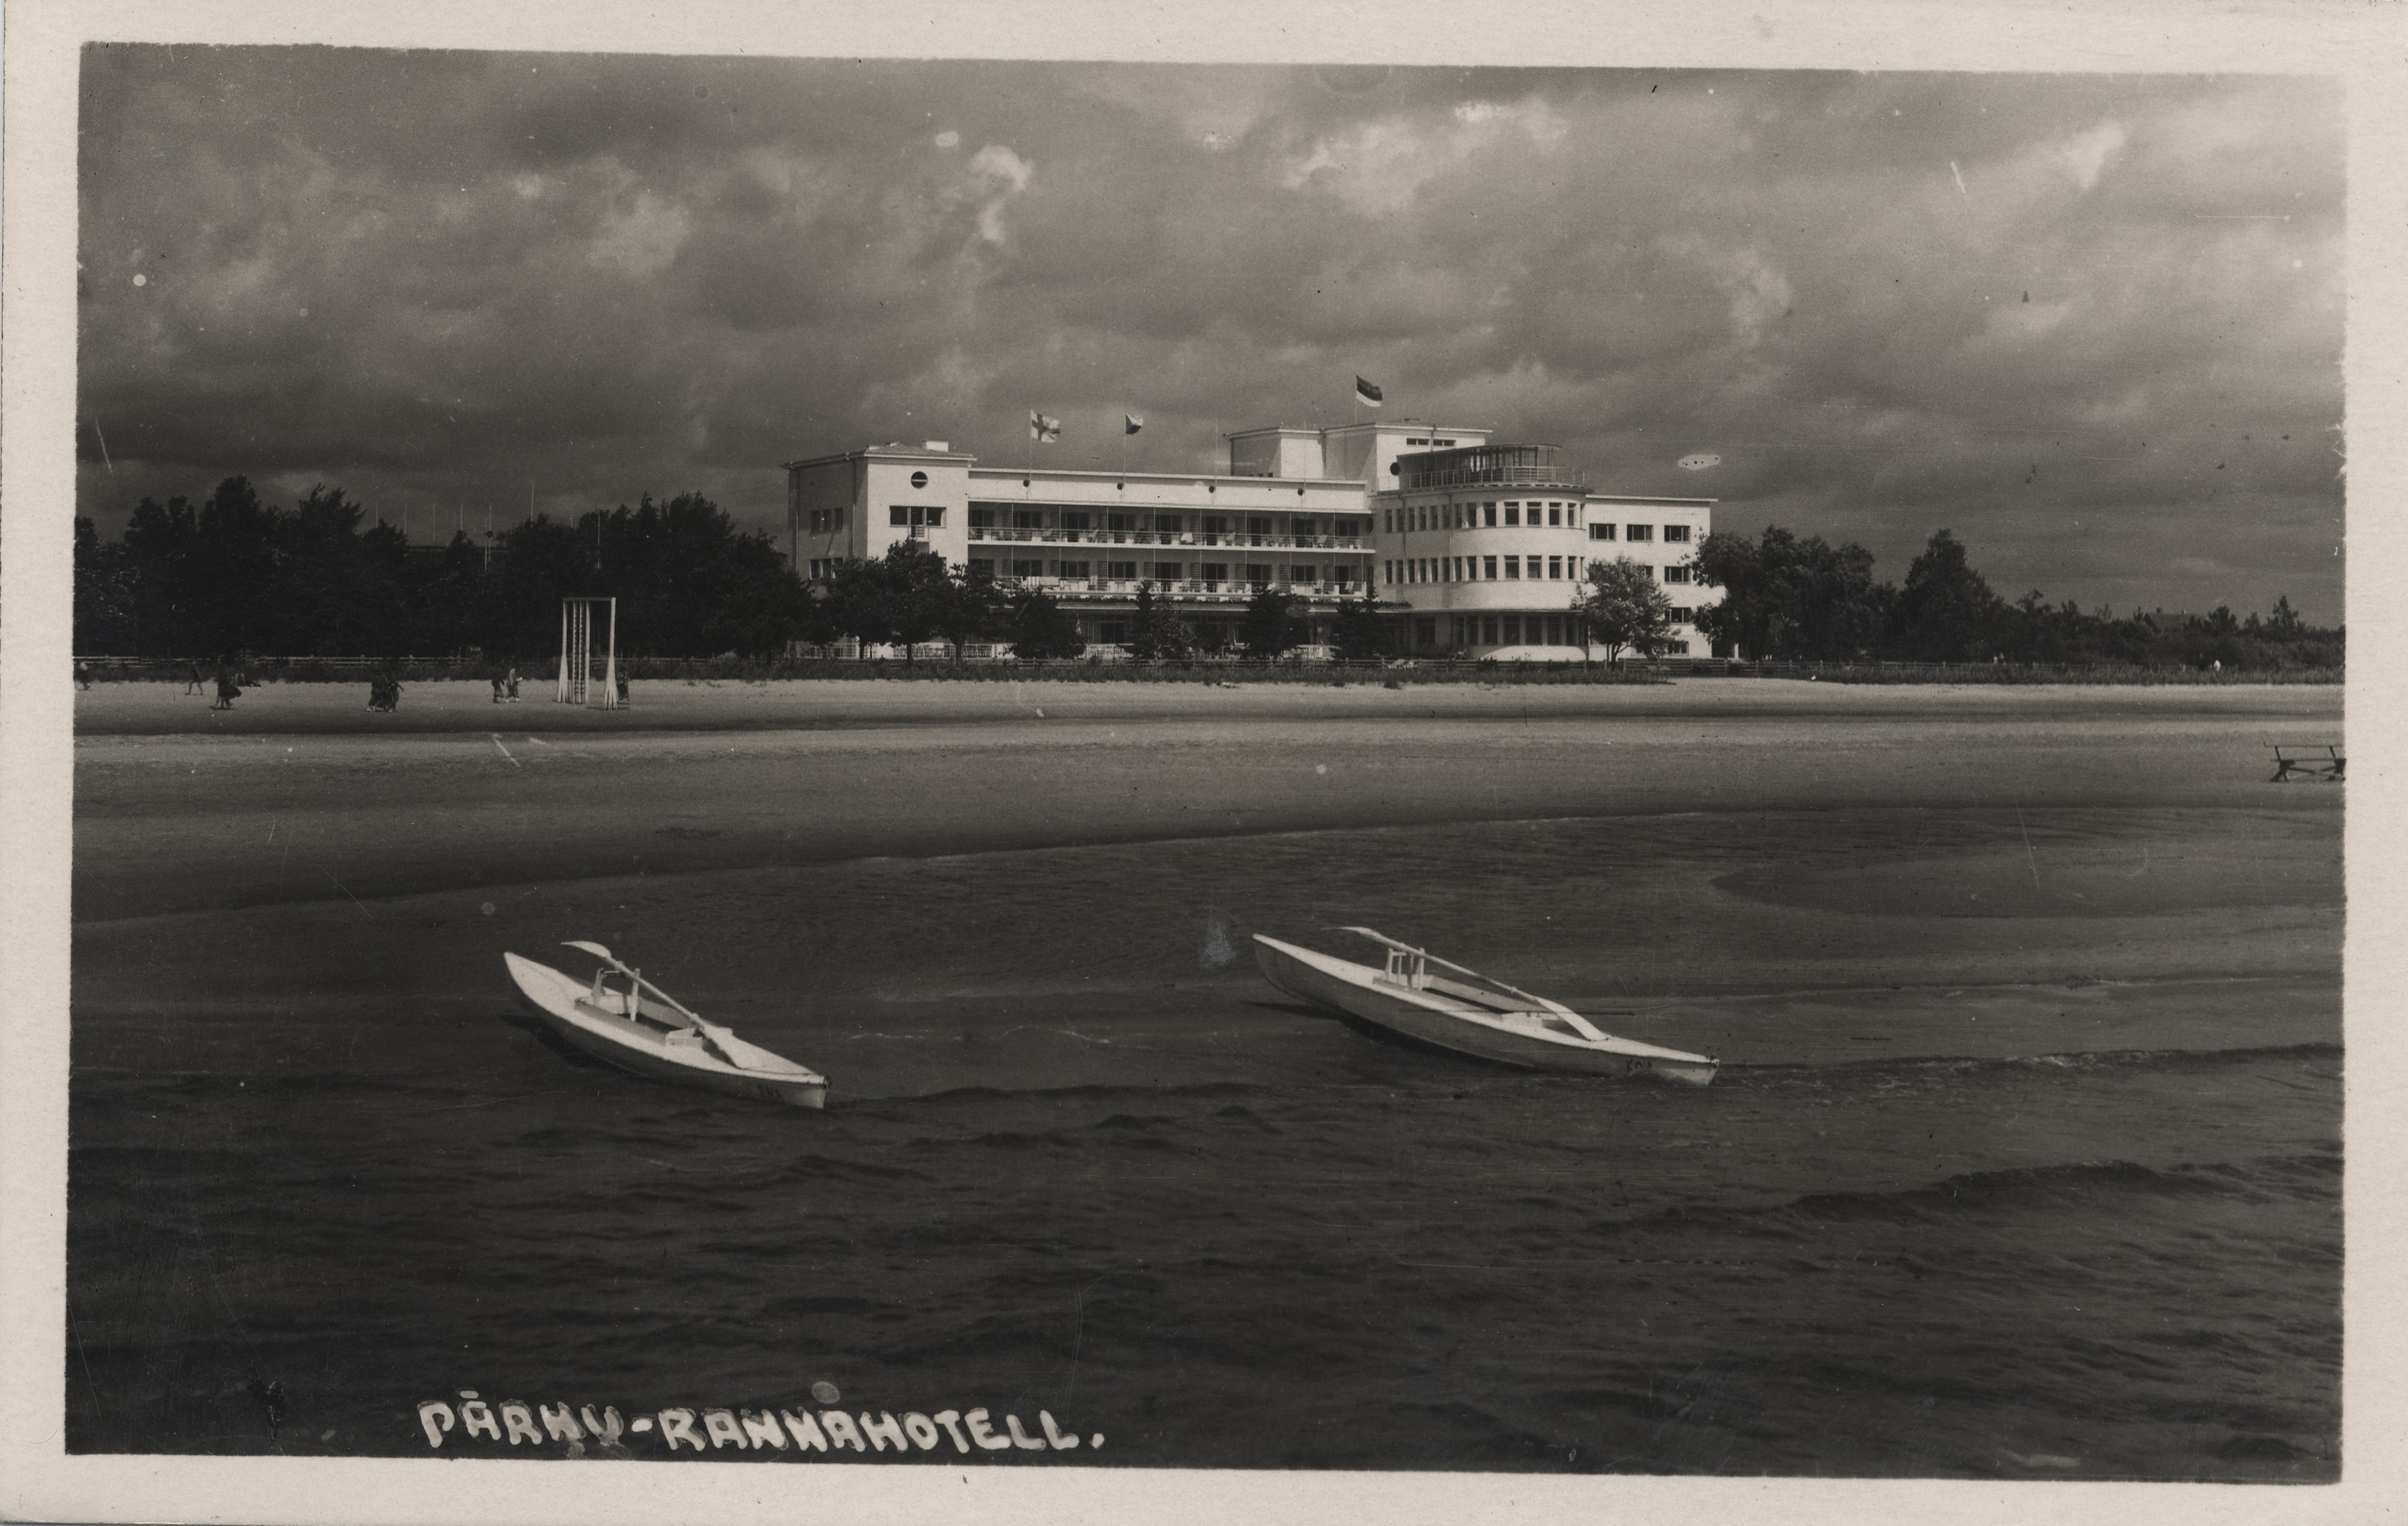 Pärnu beach hotel